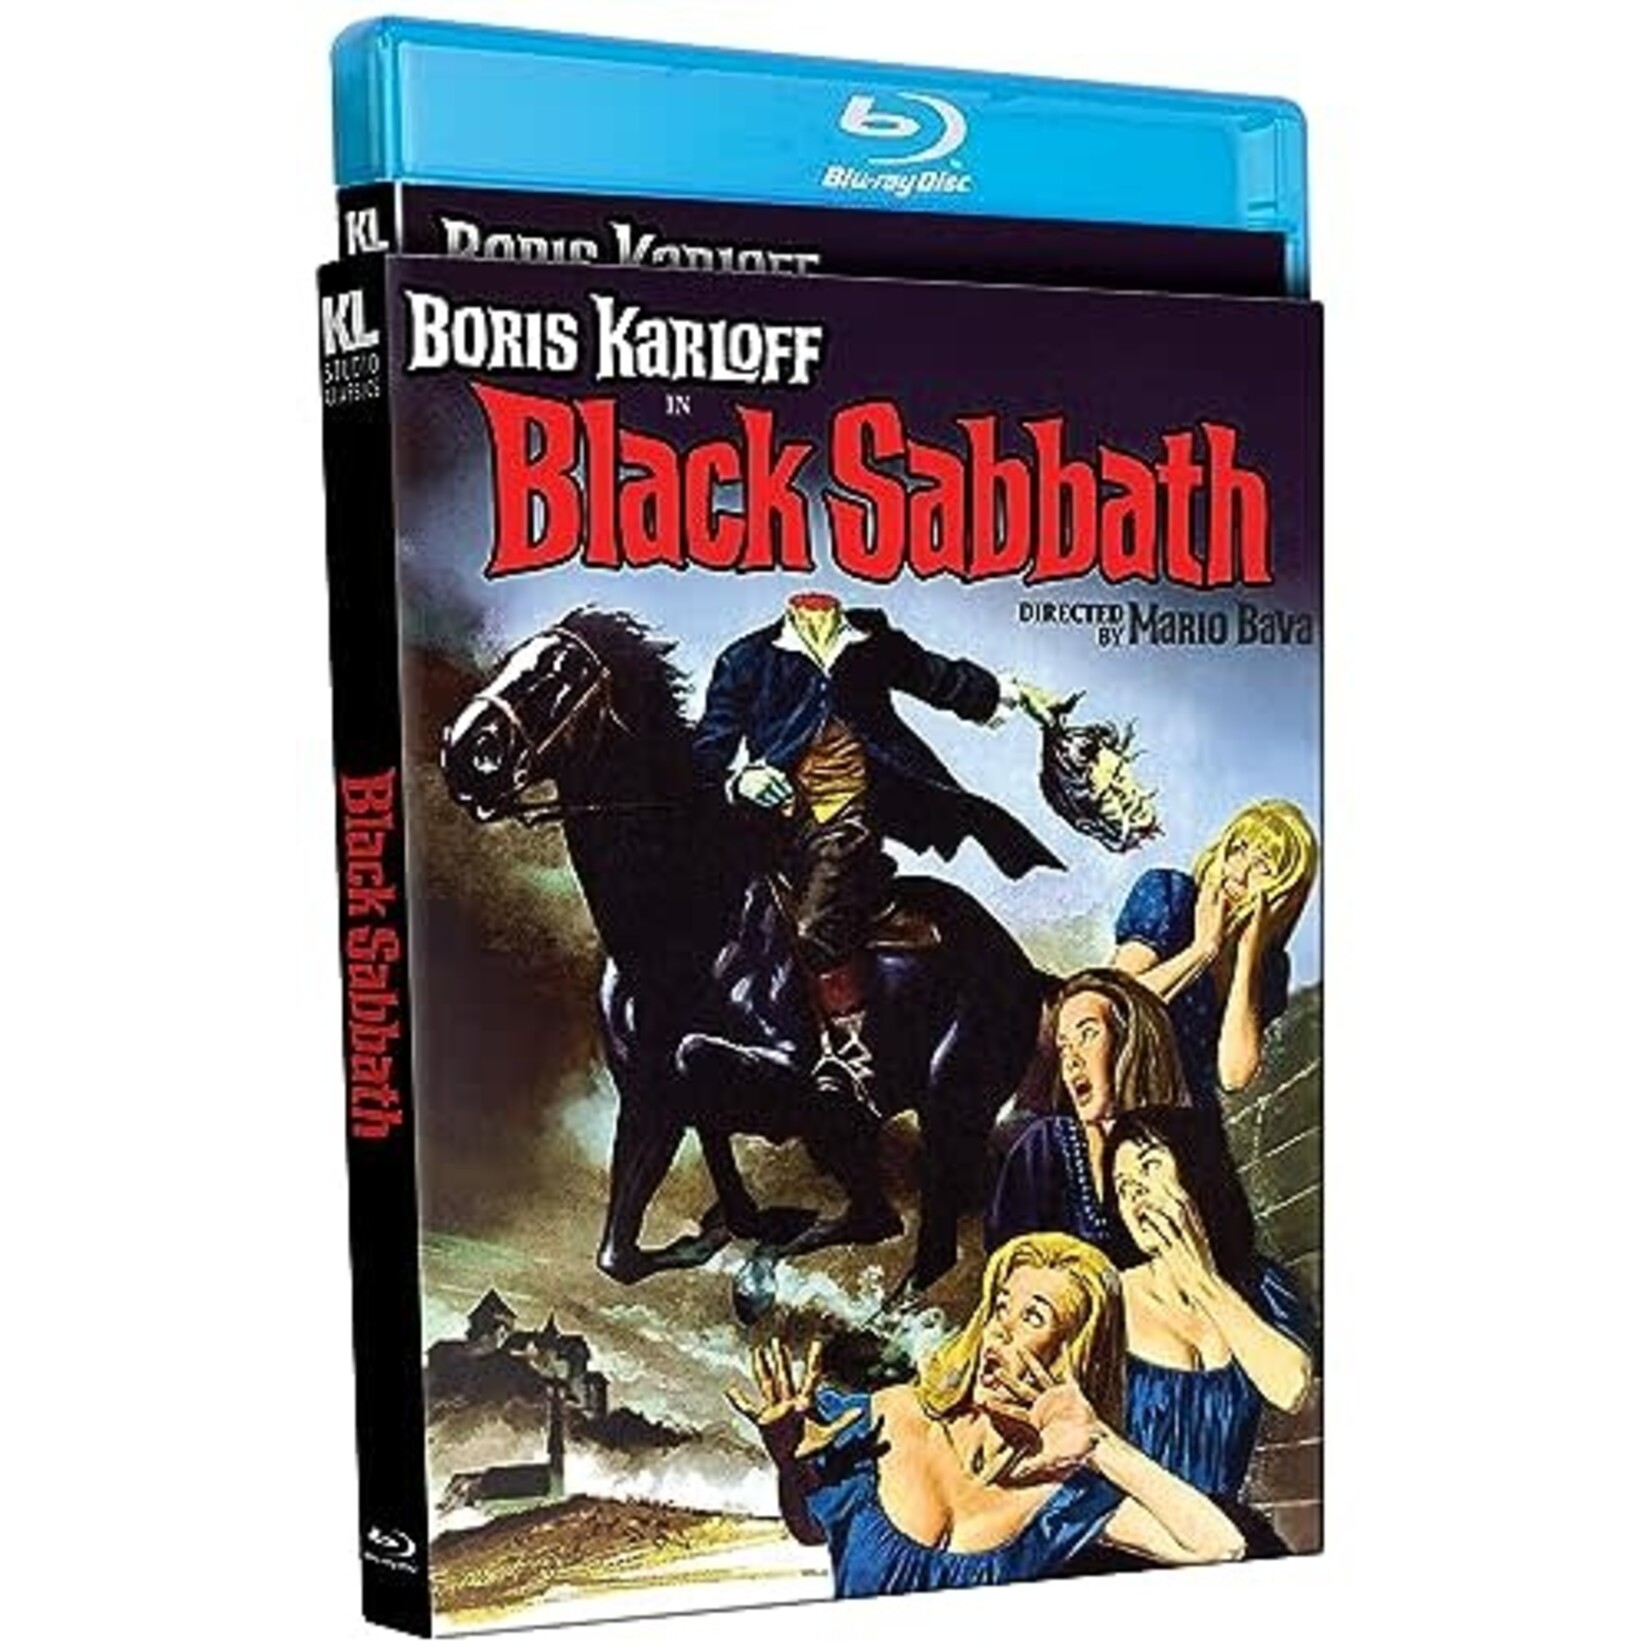 Black Sabbath (1963) [BRD]